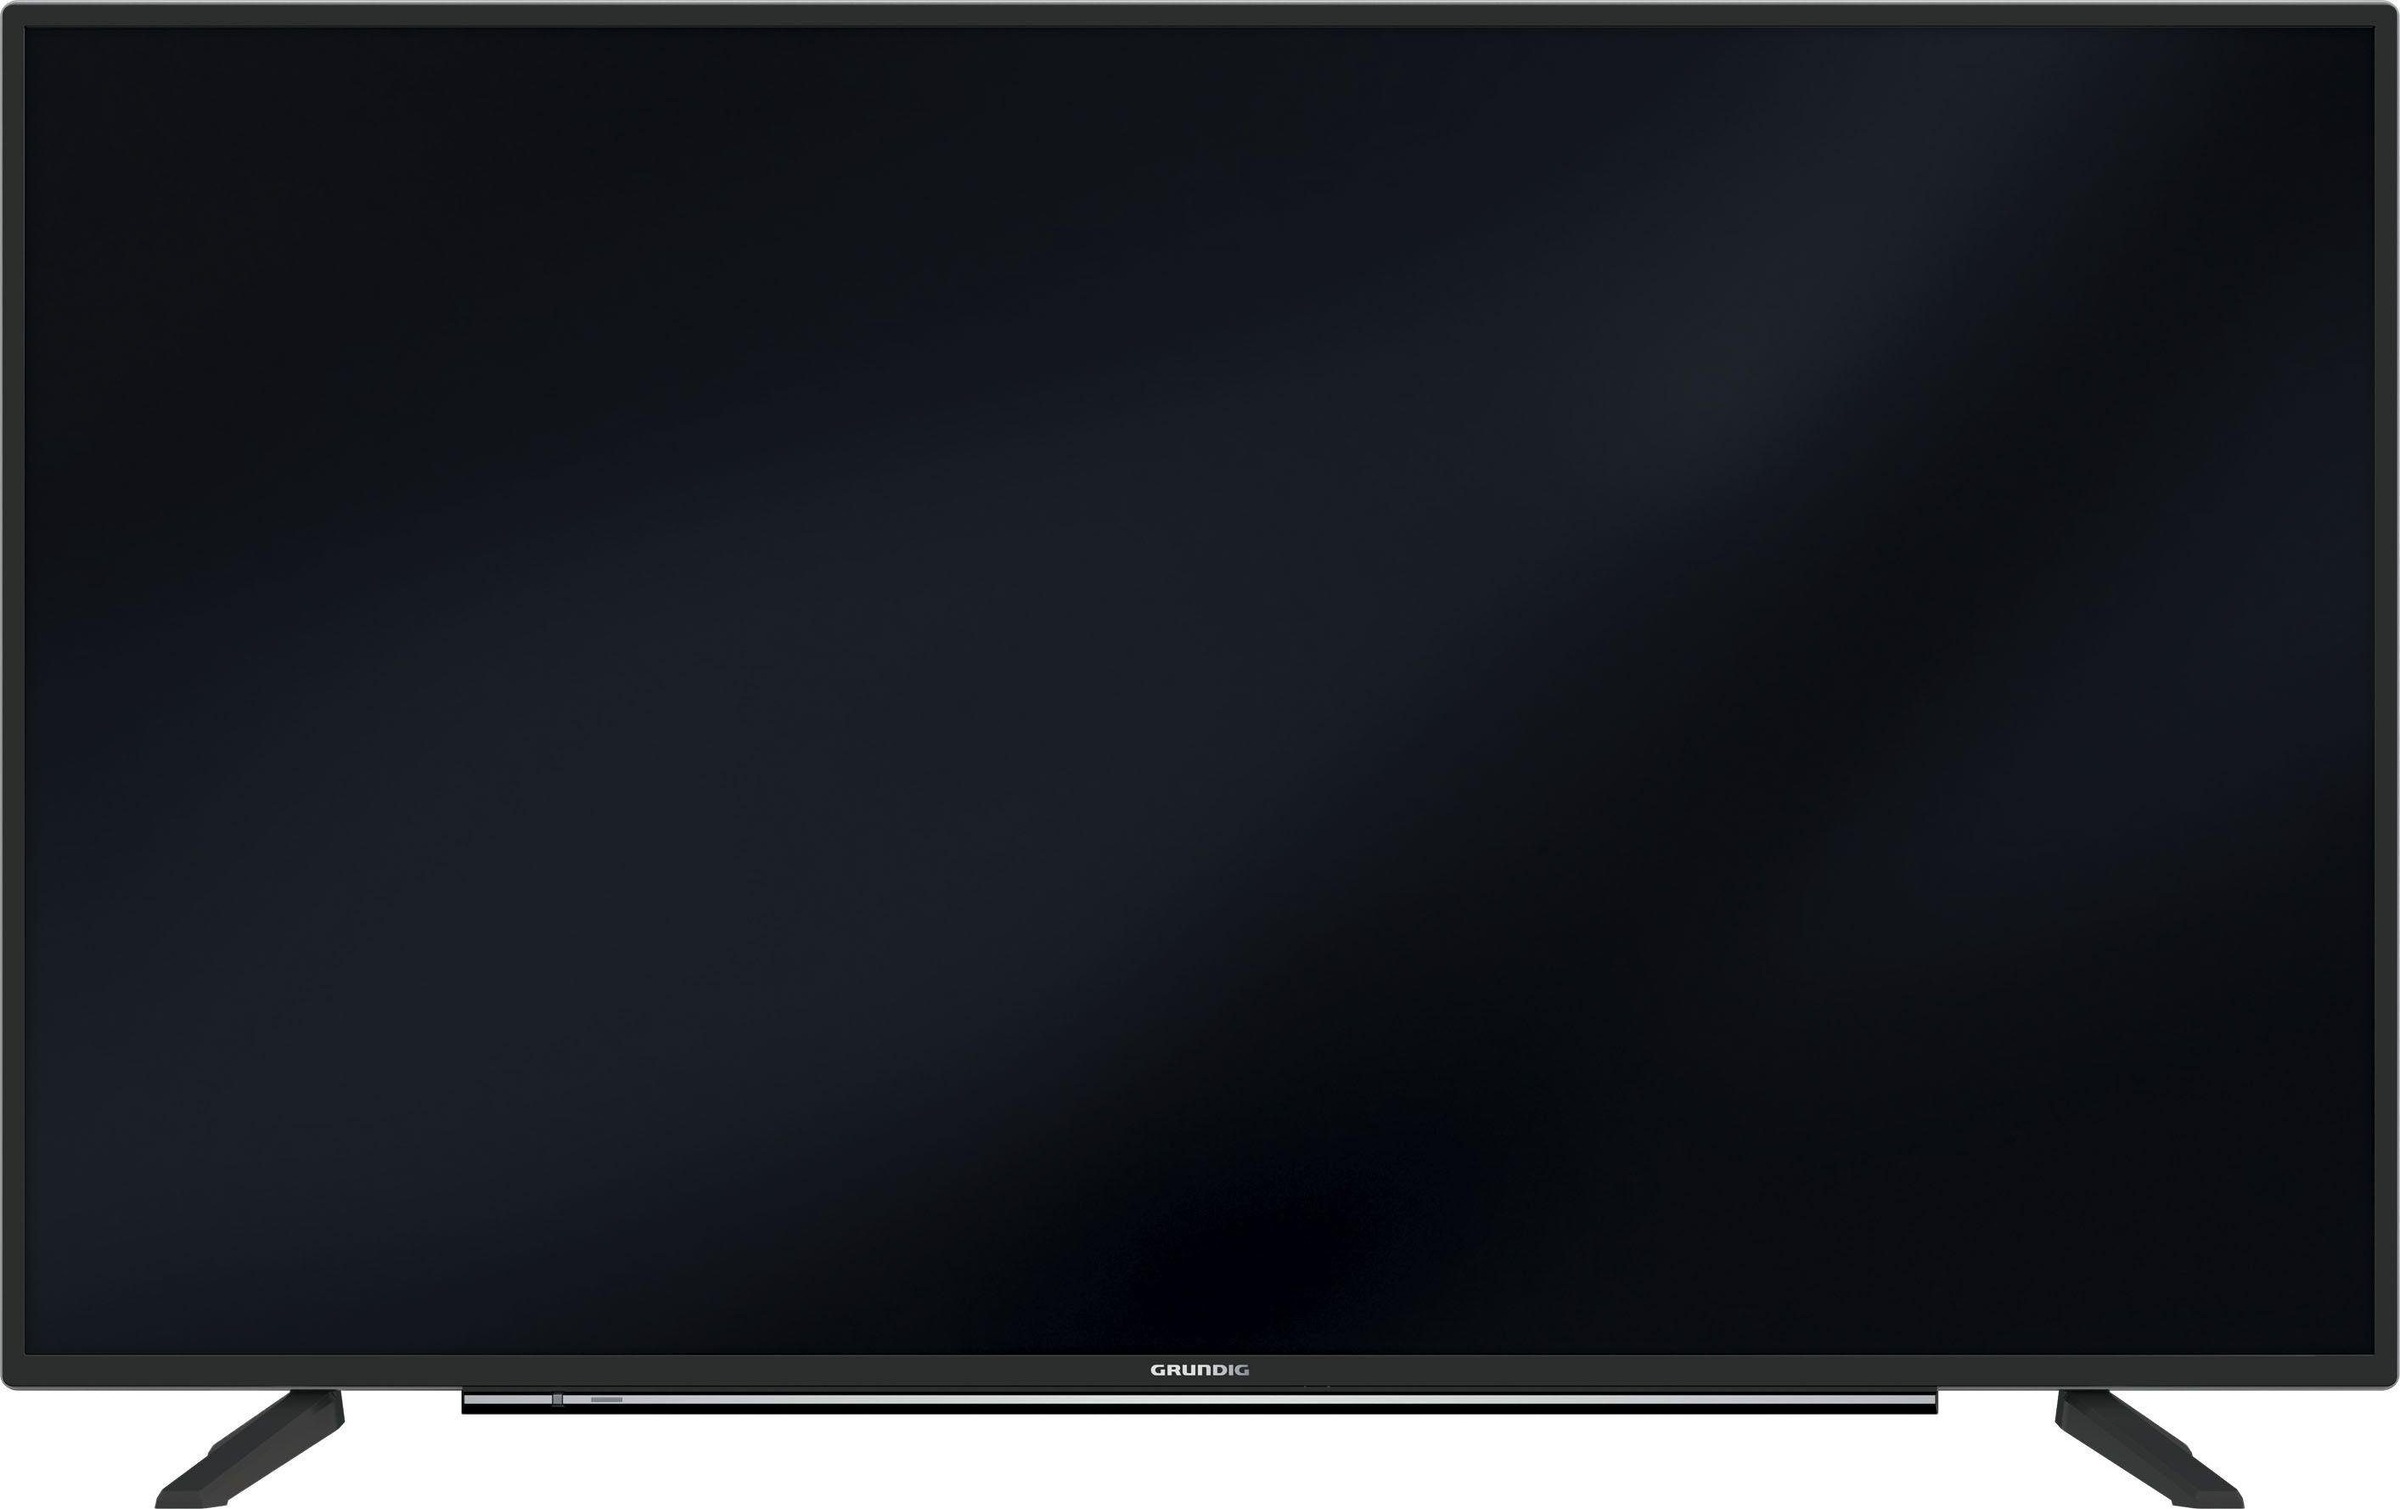 Grundig LED-Fernseher »32 VLE 6020 - Fire TV Edition TCJ000«, 80 cm/32  Zoll, Full HD, Smart-TV, Fire-TV-Edition jetzt kaufen bei OTTO